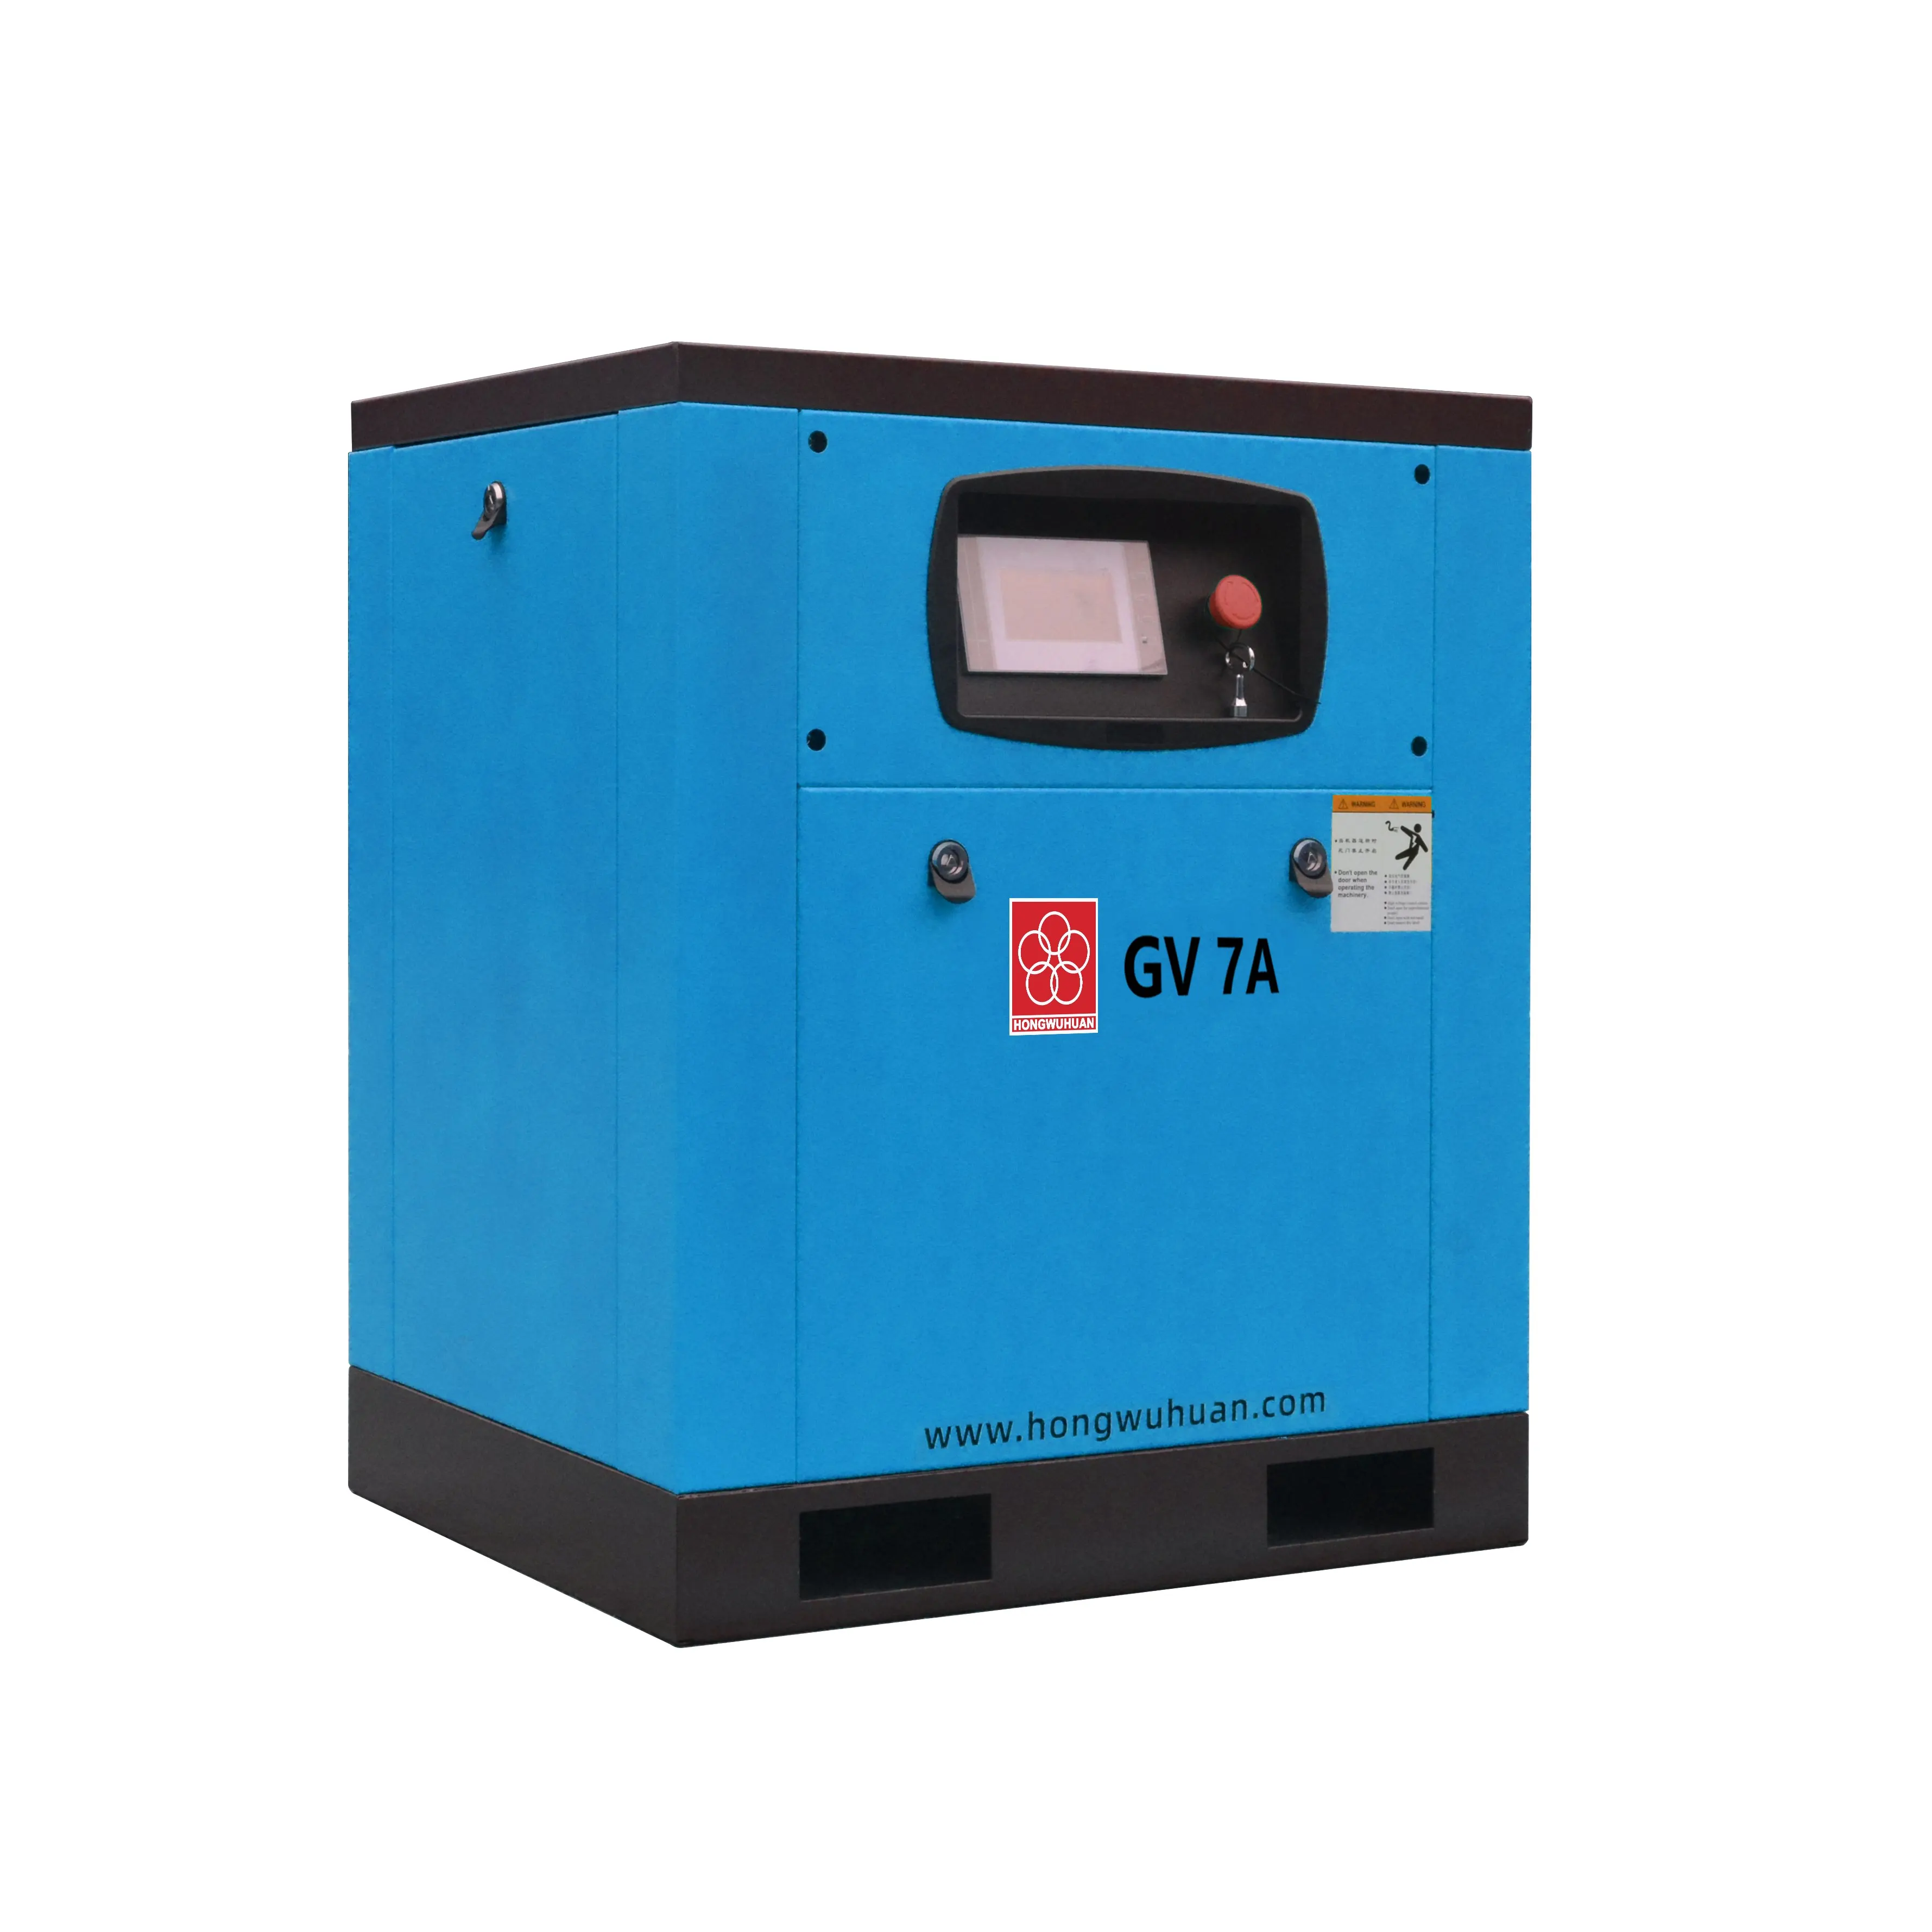 New 7.5kw 8hp Industrial Air-Compressor Screw Compressor Machine 8 Bar Working Pressure for Industries